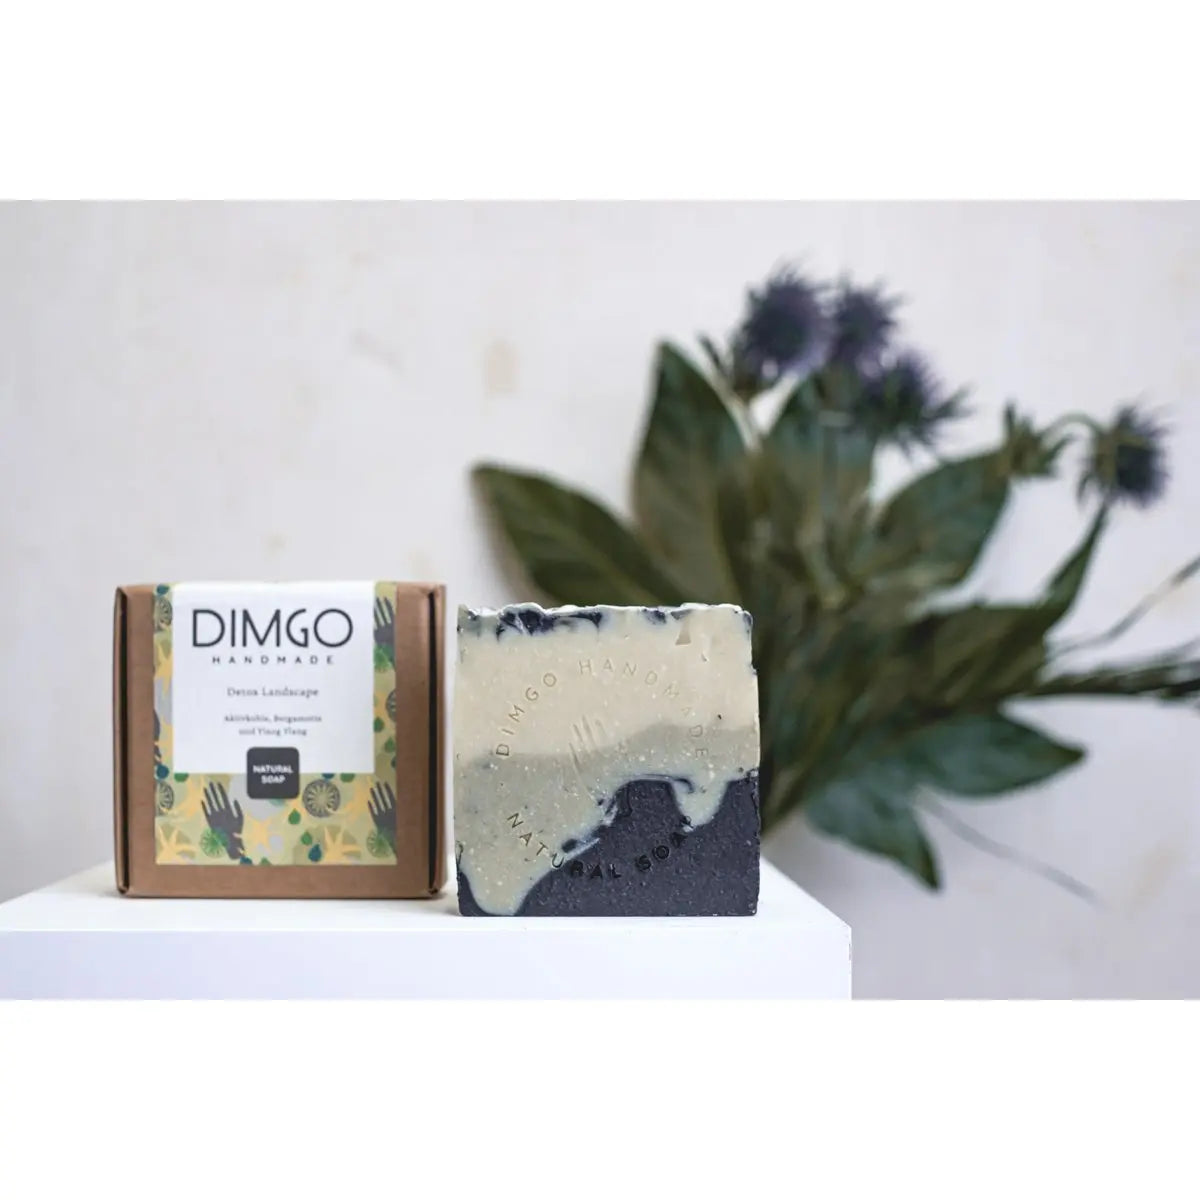 Dimgo handmade zeepbar detox landschap handgemaakteskincare